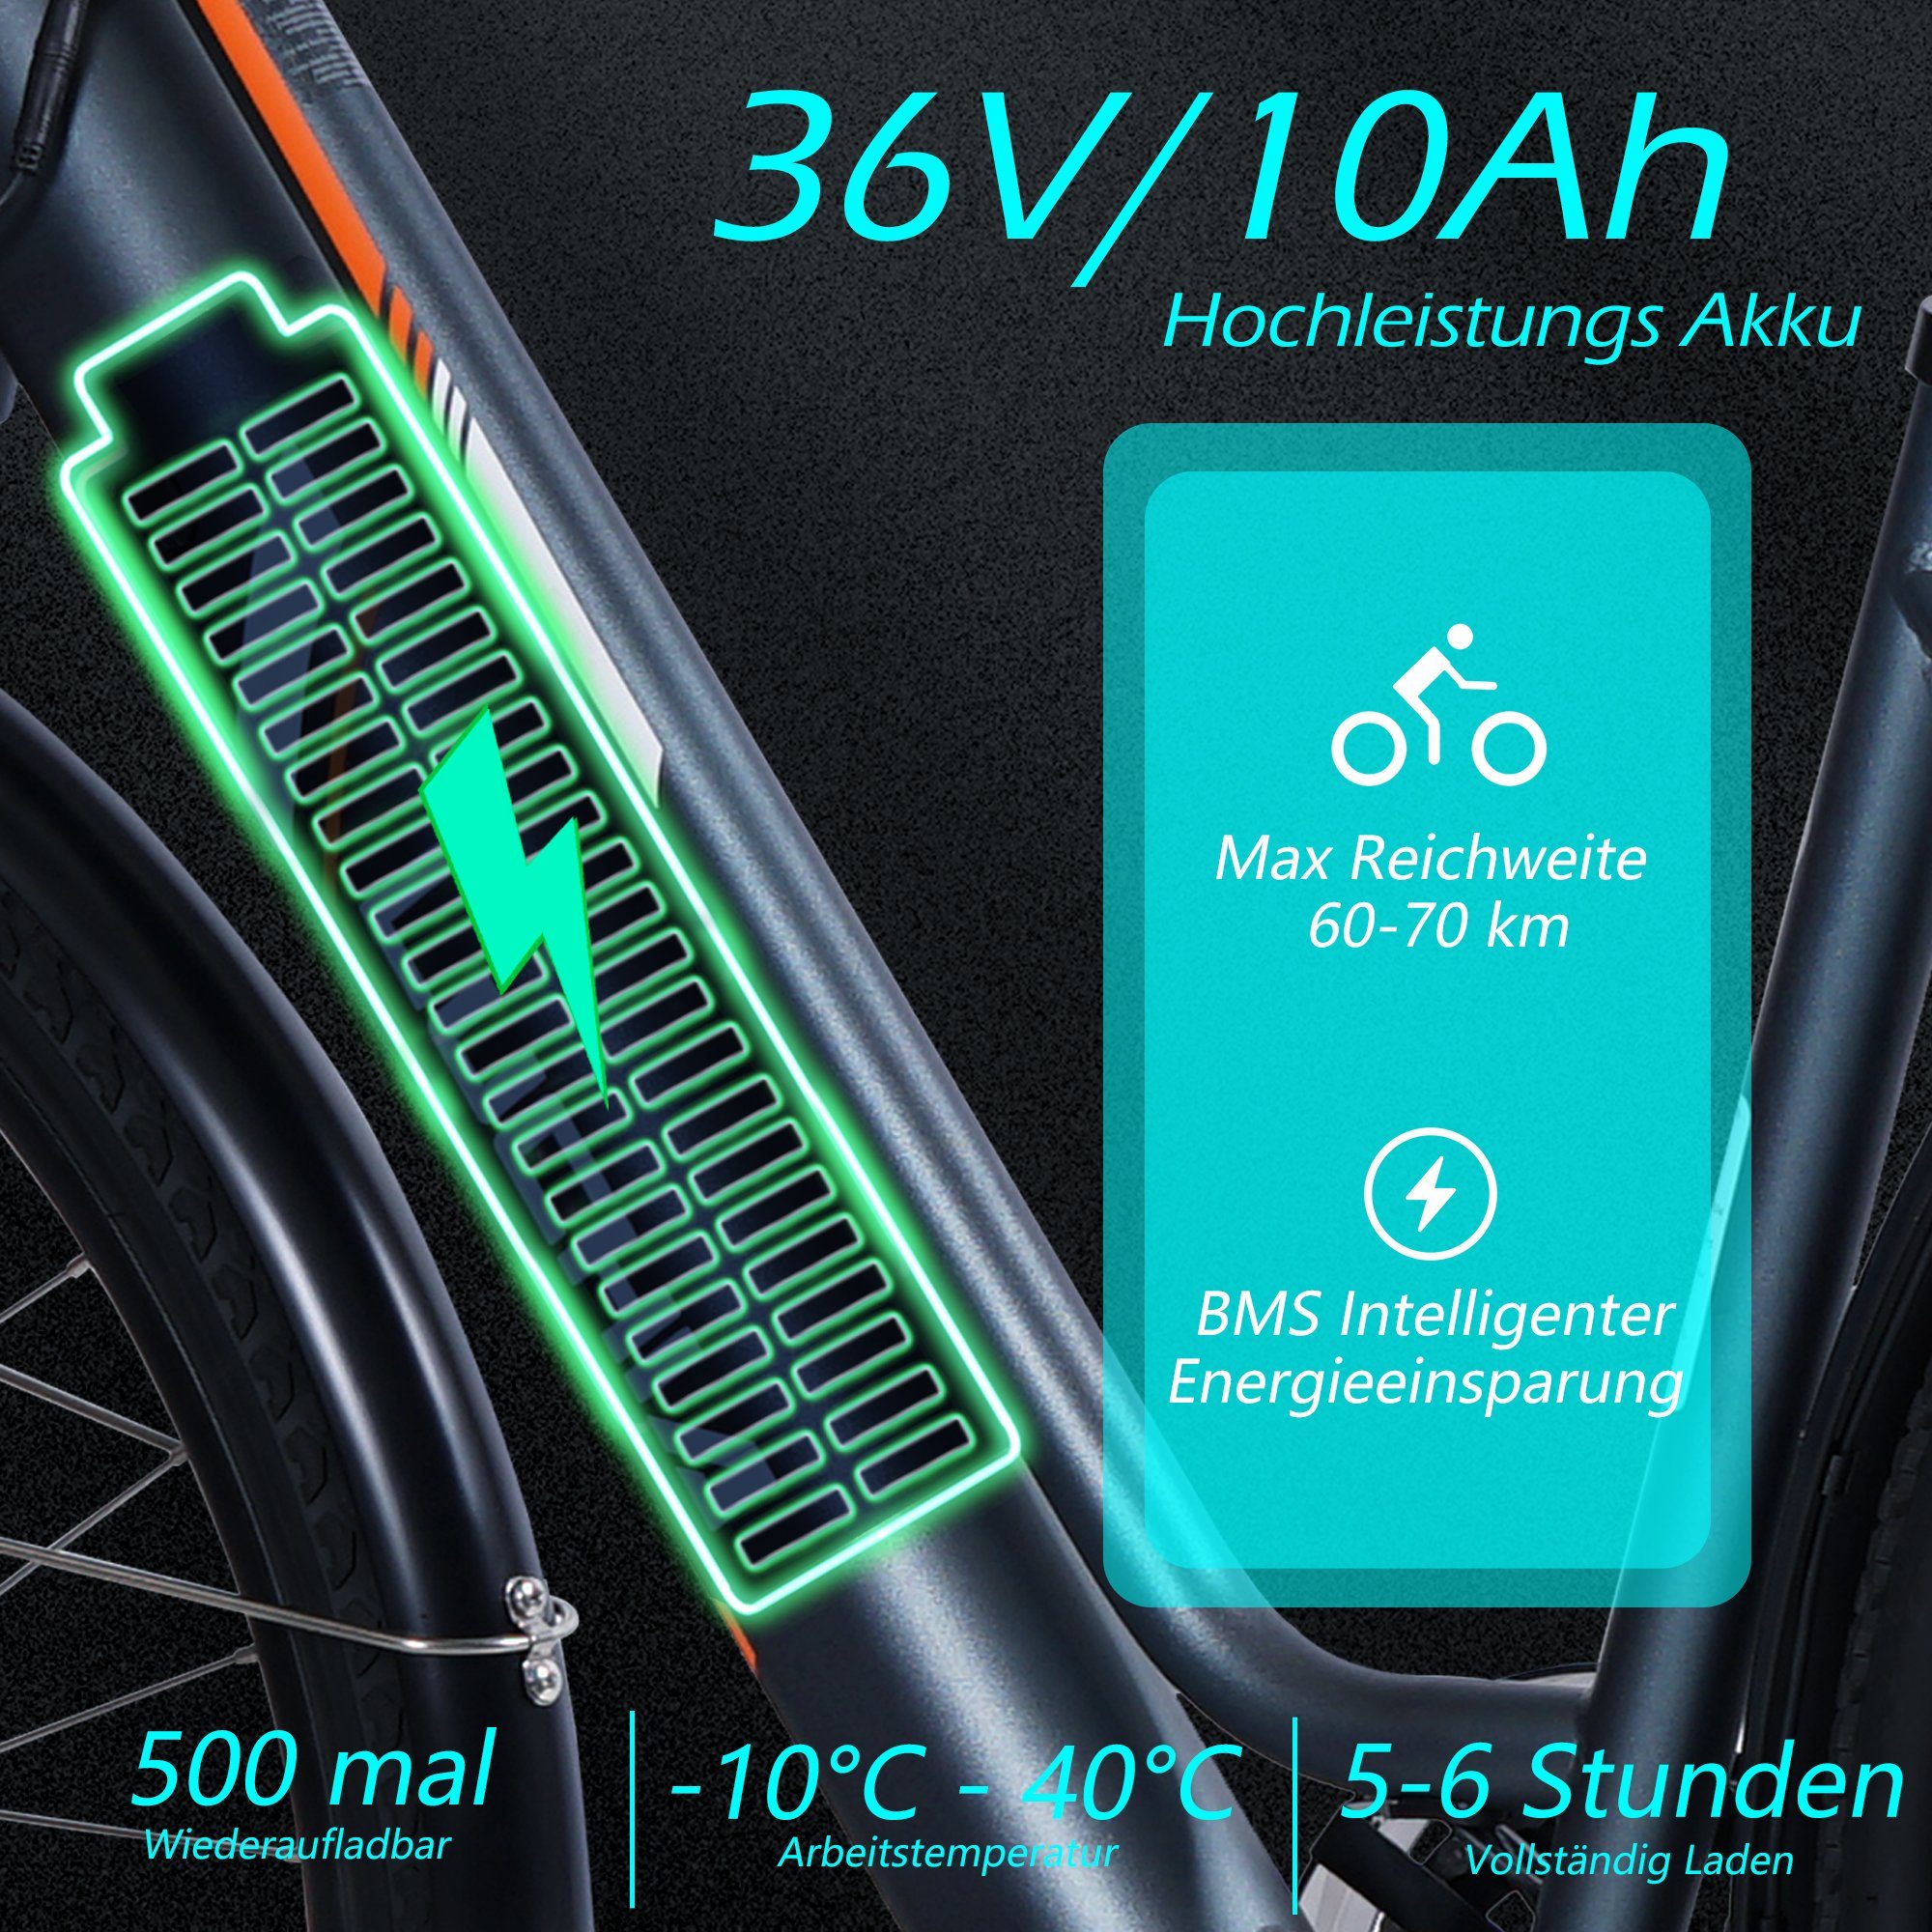 6 Pendlerfahrrad), Gehhilfemodus,Comes Elektrofahrrad, 6km/h km/h 36V/10Ah MTB, Heckmotor, front (kraftunterstützt/Pedal),25km/h, (1.5Zoll Fangqi basket with Fahrmodi aluminum rack Gehunterstützungsmodus, 250W E-Bike km,120kg, städtisches rear 55–65 städtisches Blau 27,5 Smart-Bike, and Display, Zoll LCD 2 Akku,25km/h, Elektrofahrrad,E-BIKE,250W,